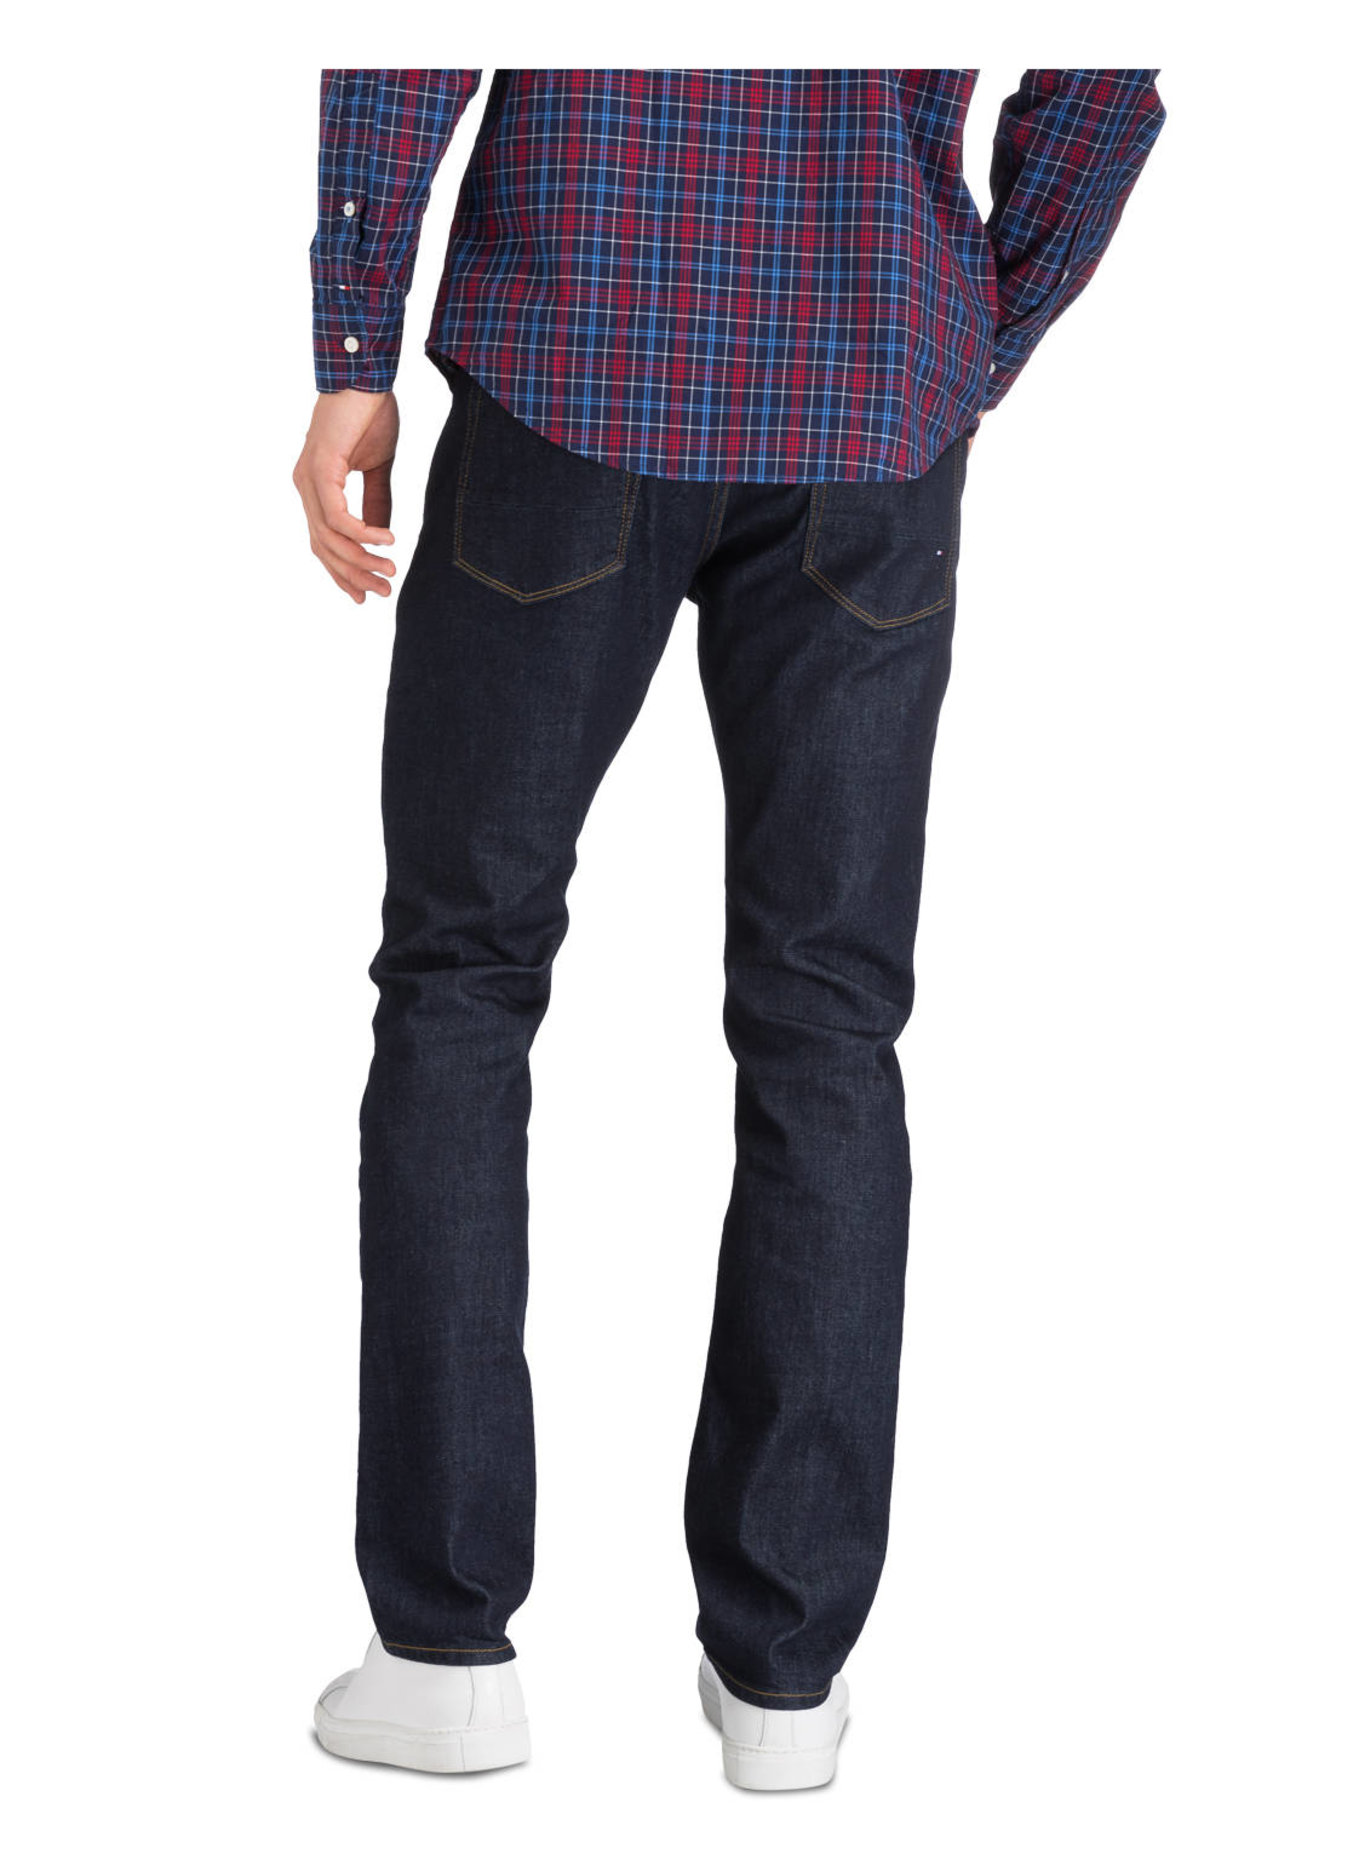 TOMMY HILFIGER Jeans DENTON Straight Fit, Farbe: 919 rinsed (Bild 3)